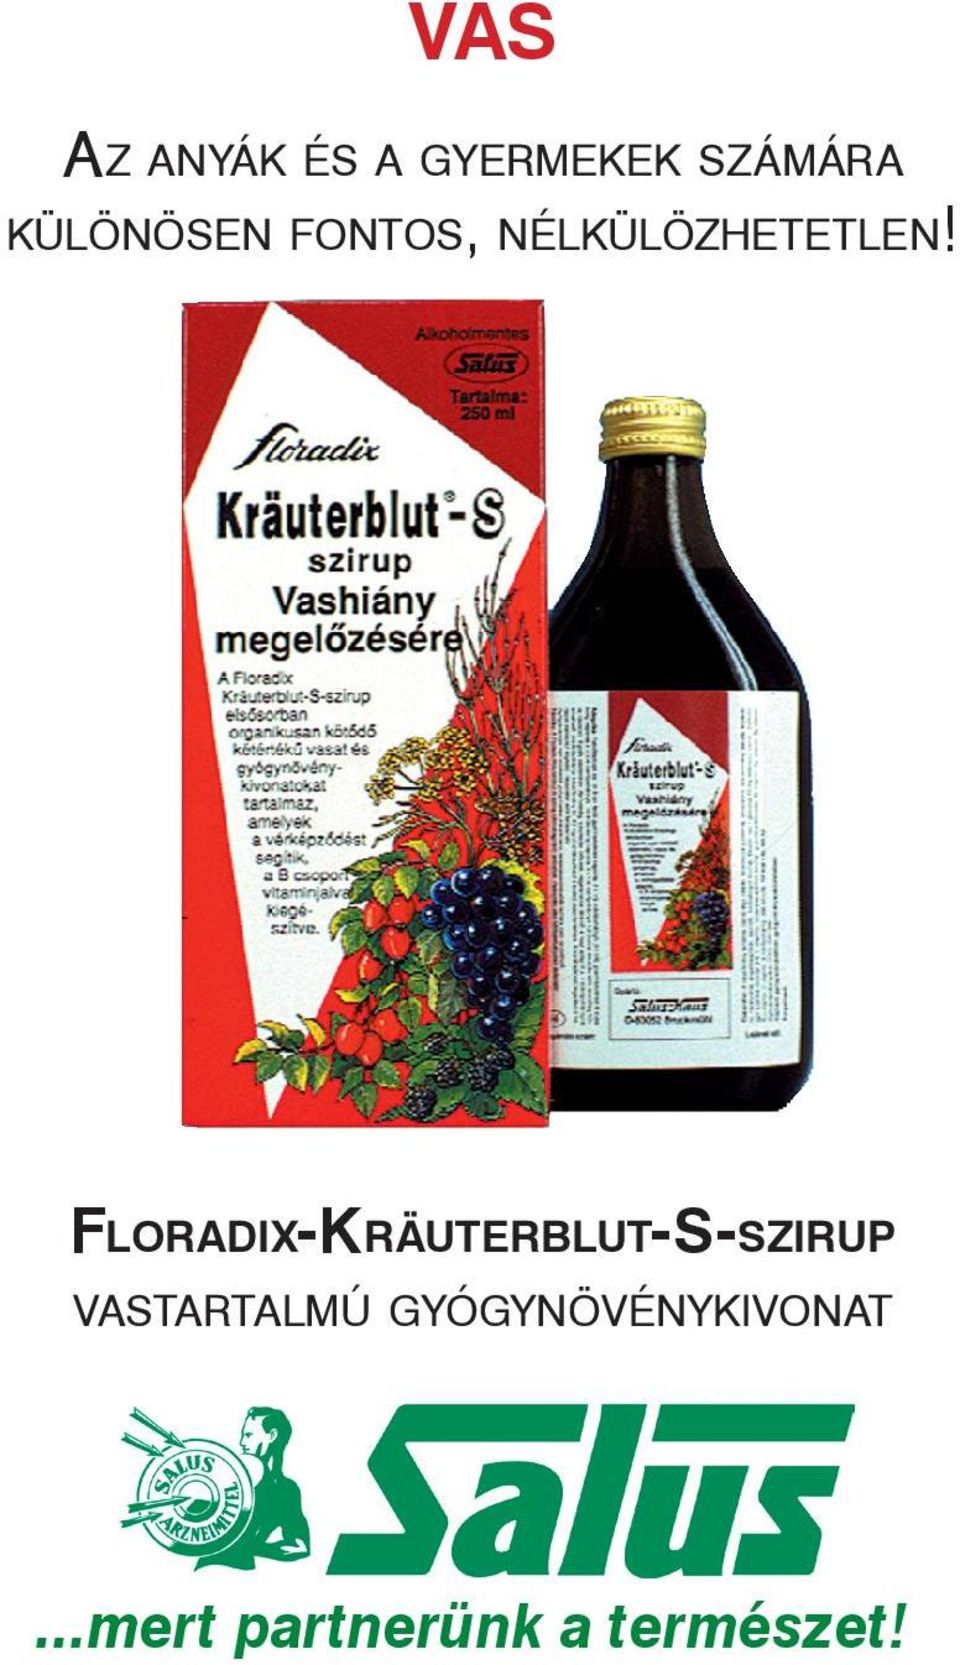 FLORADIX-KRÄUTERBLUT-S-SZIRUP